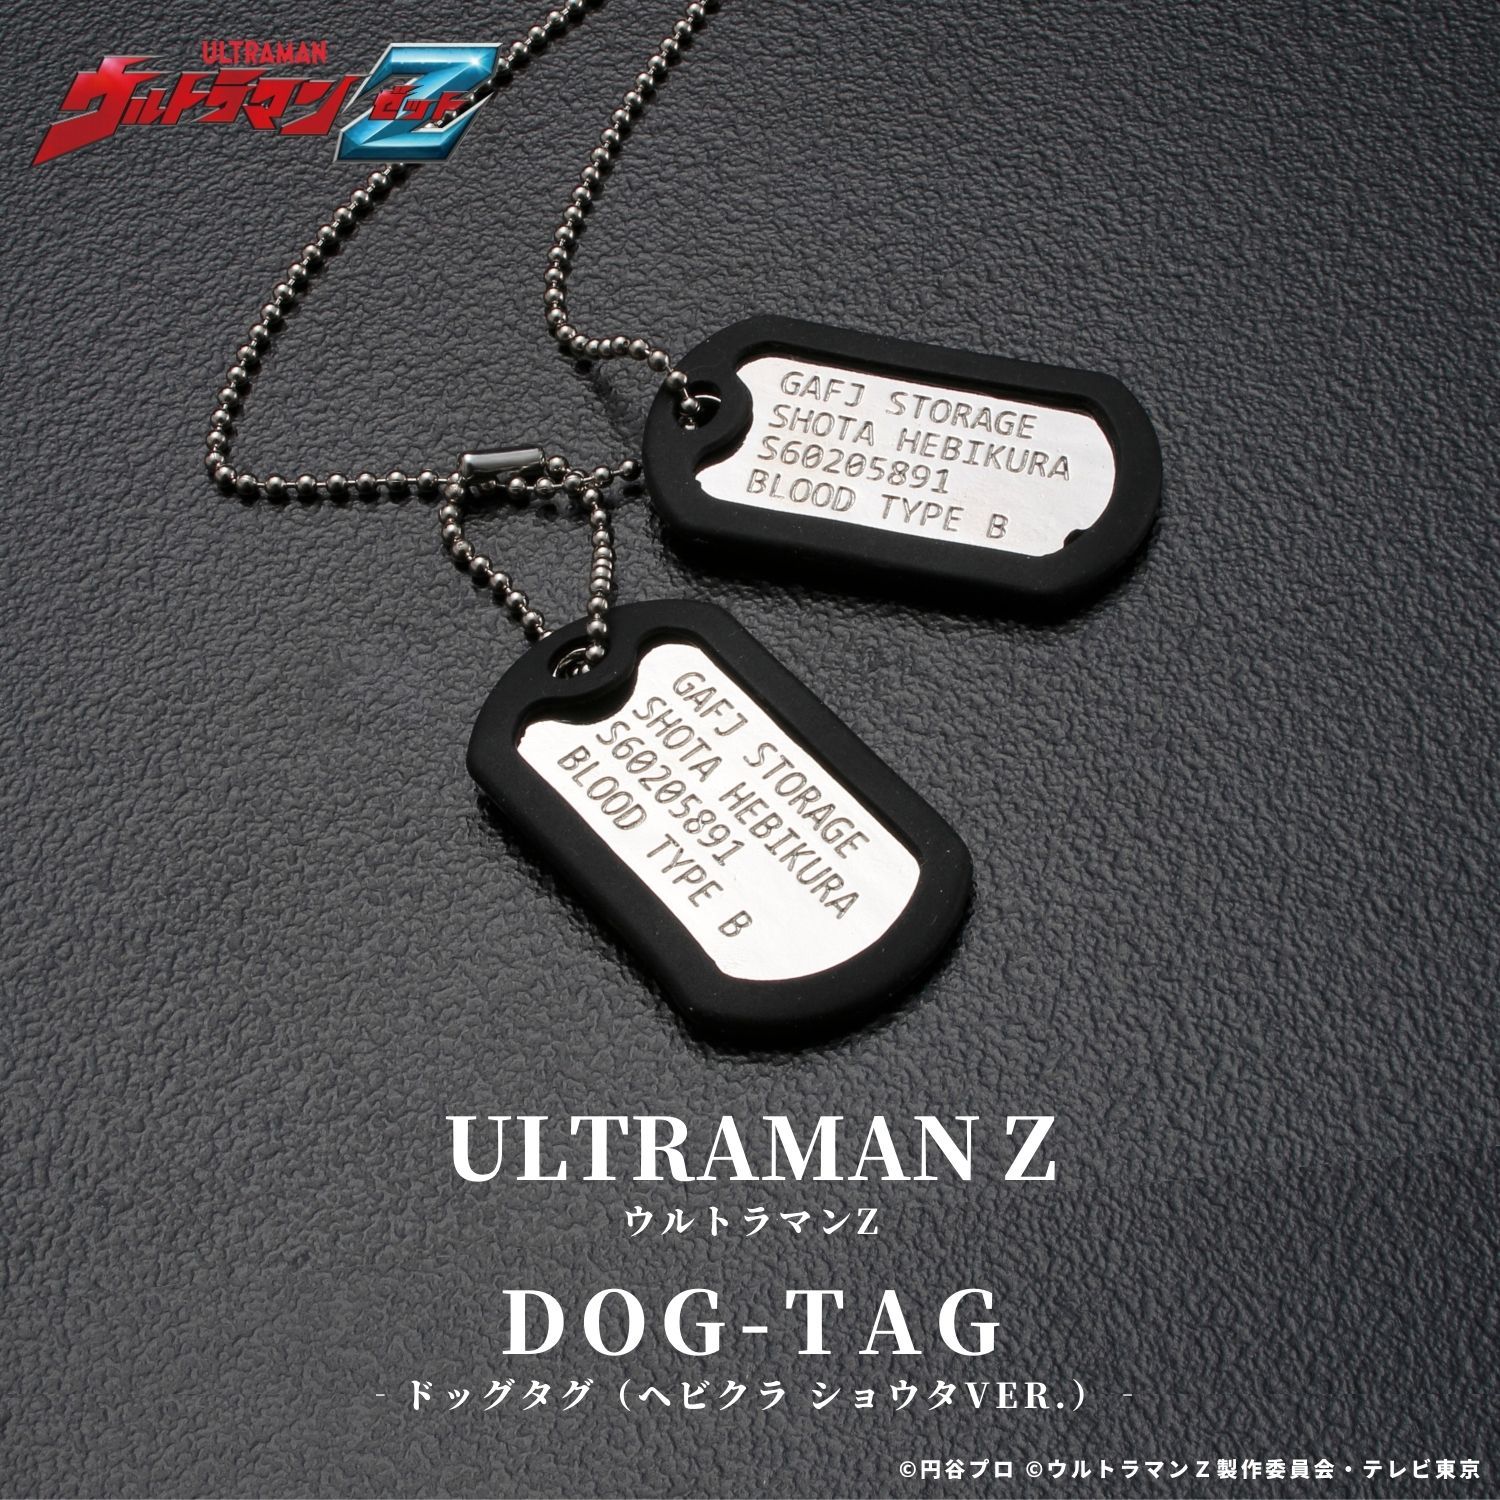 Shota Hebikura Dog Tag Pendant Necklace—Ultraman Z